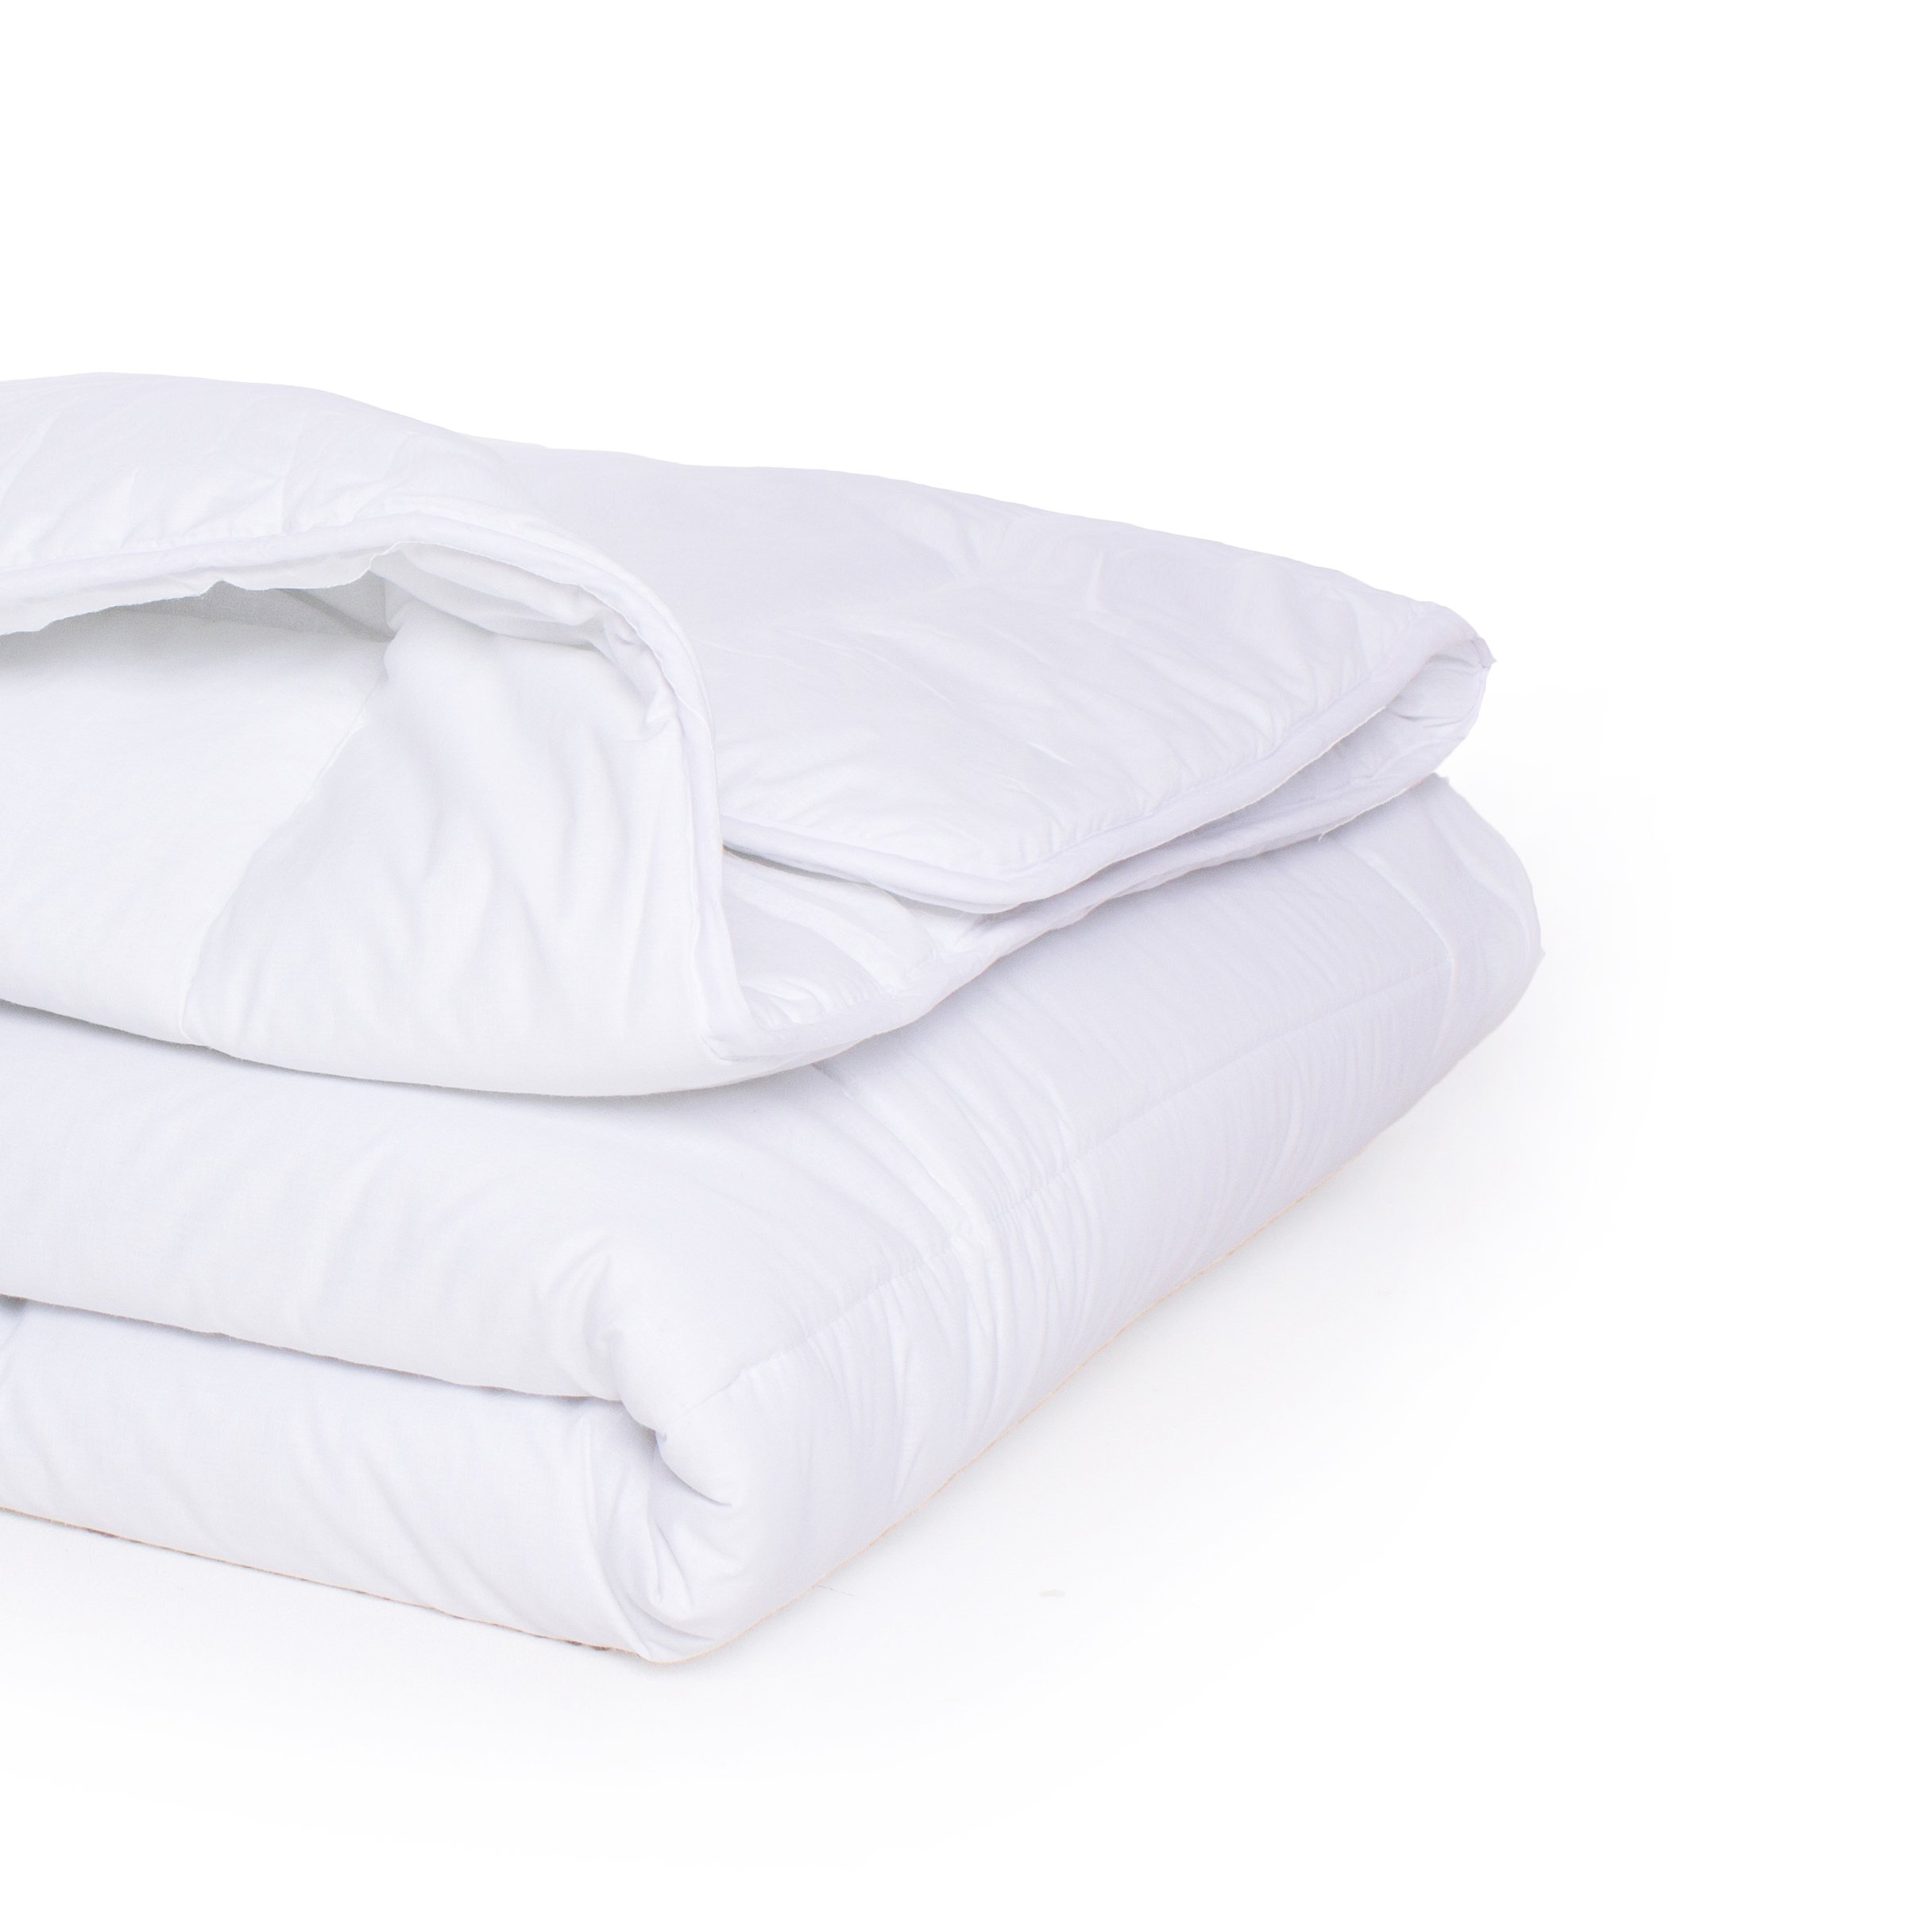 Одеяло шерстяное MirSon Bianco Экстра Премиум №0786, демисезонное, 140x205 см, белое - фото 4